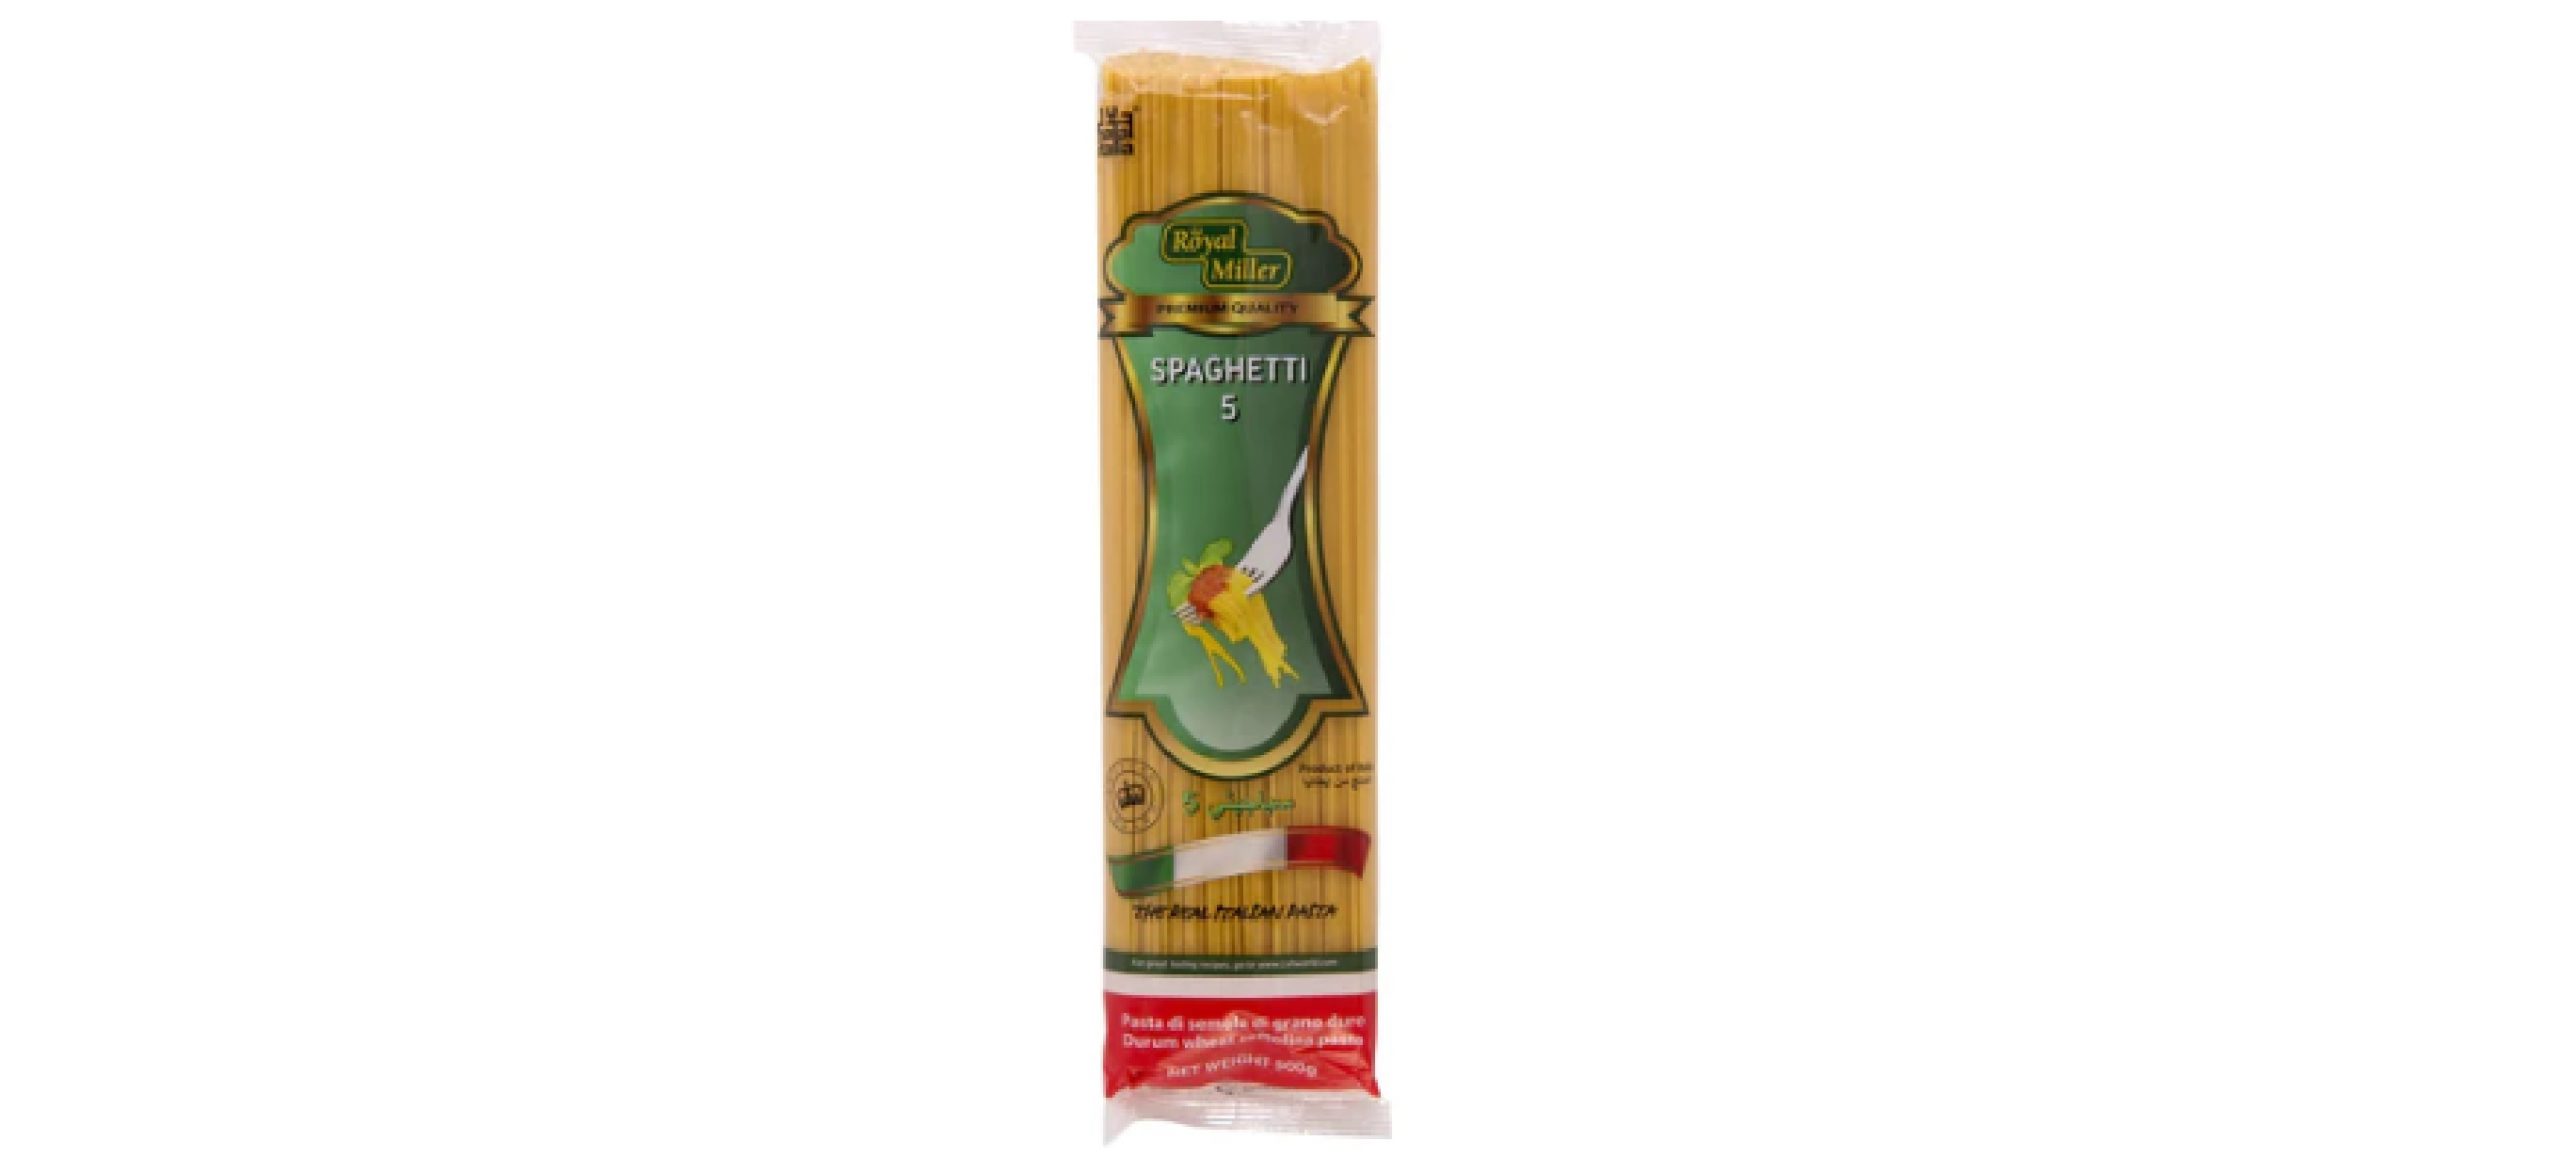 Royal Miller Spaghetti 5 – 500g